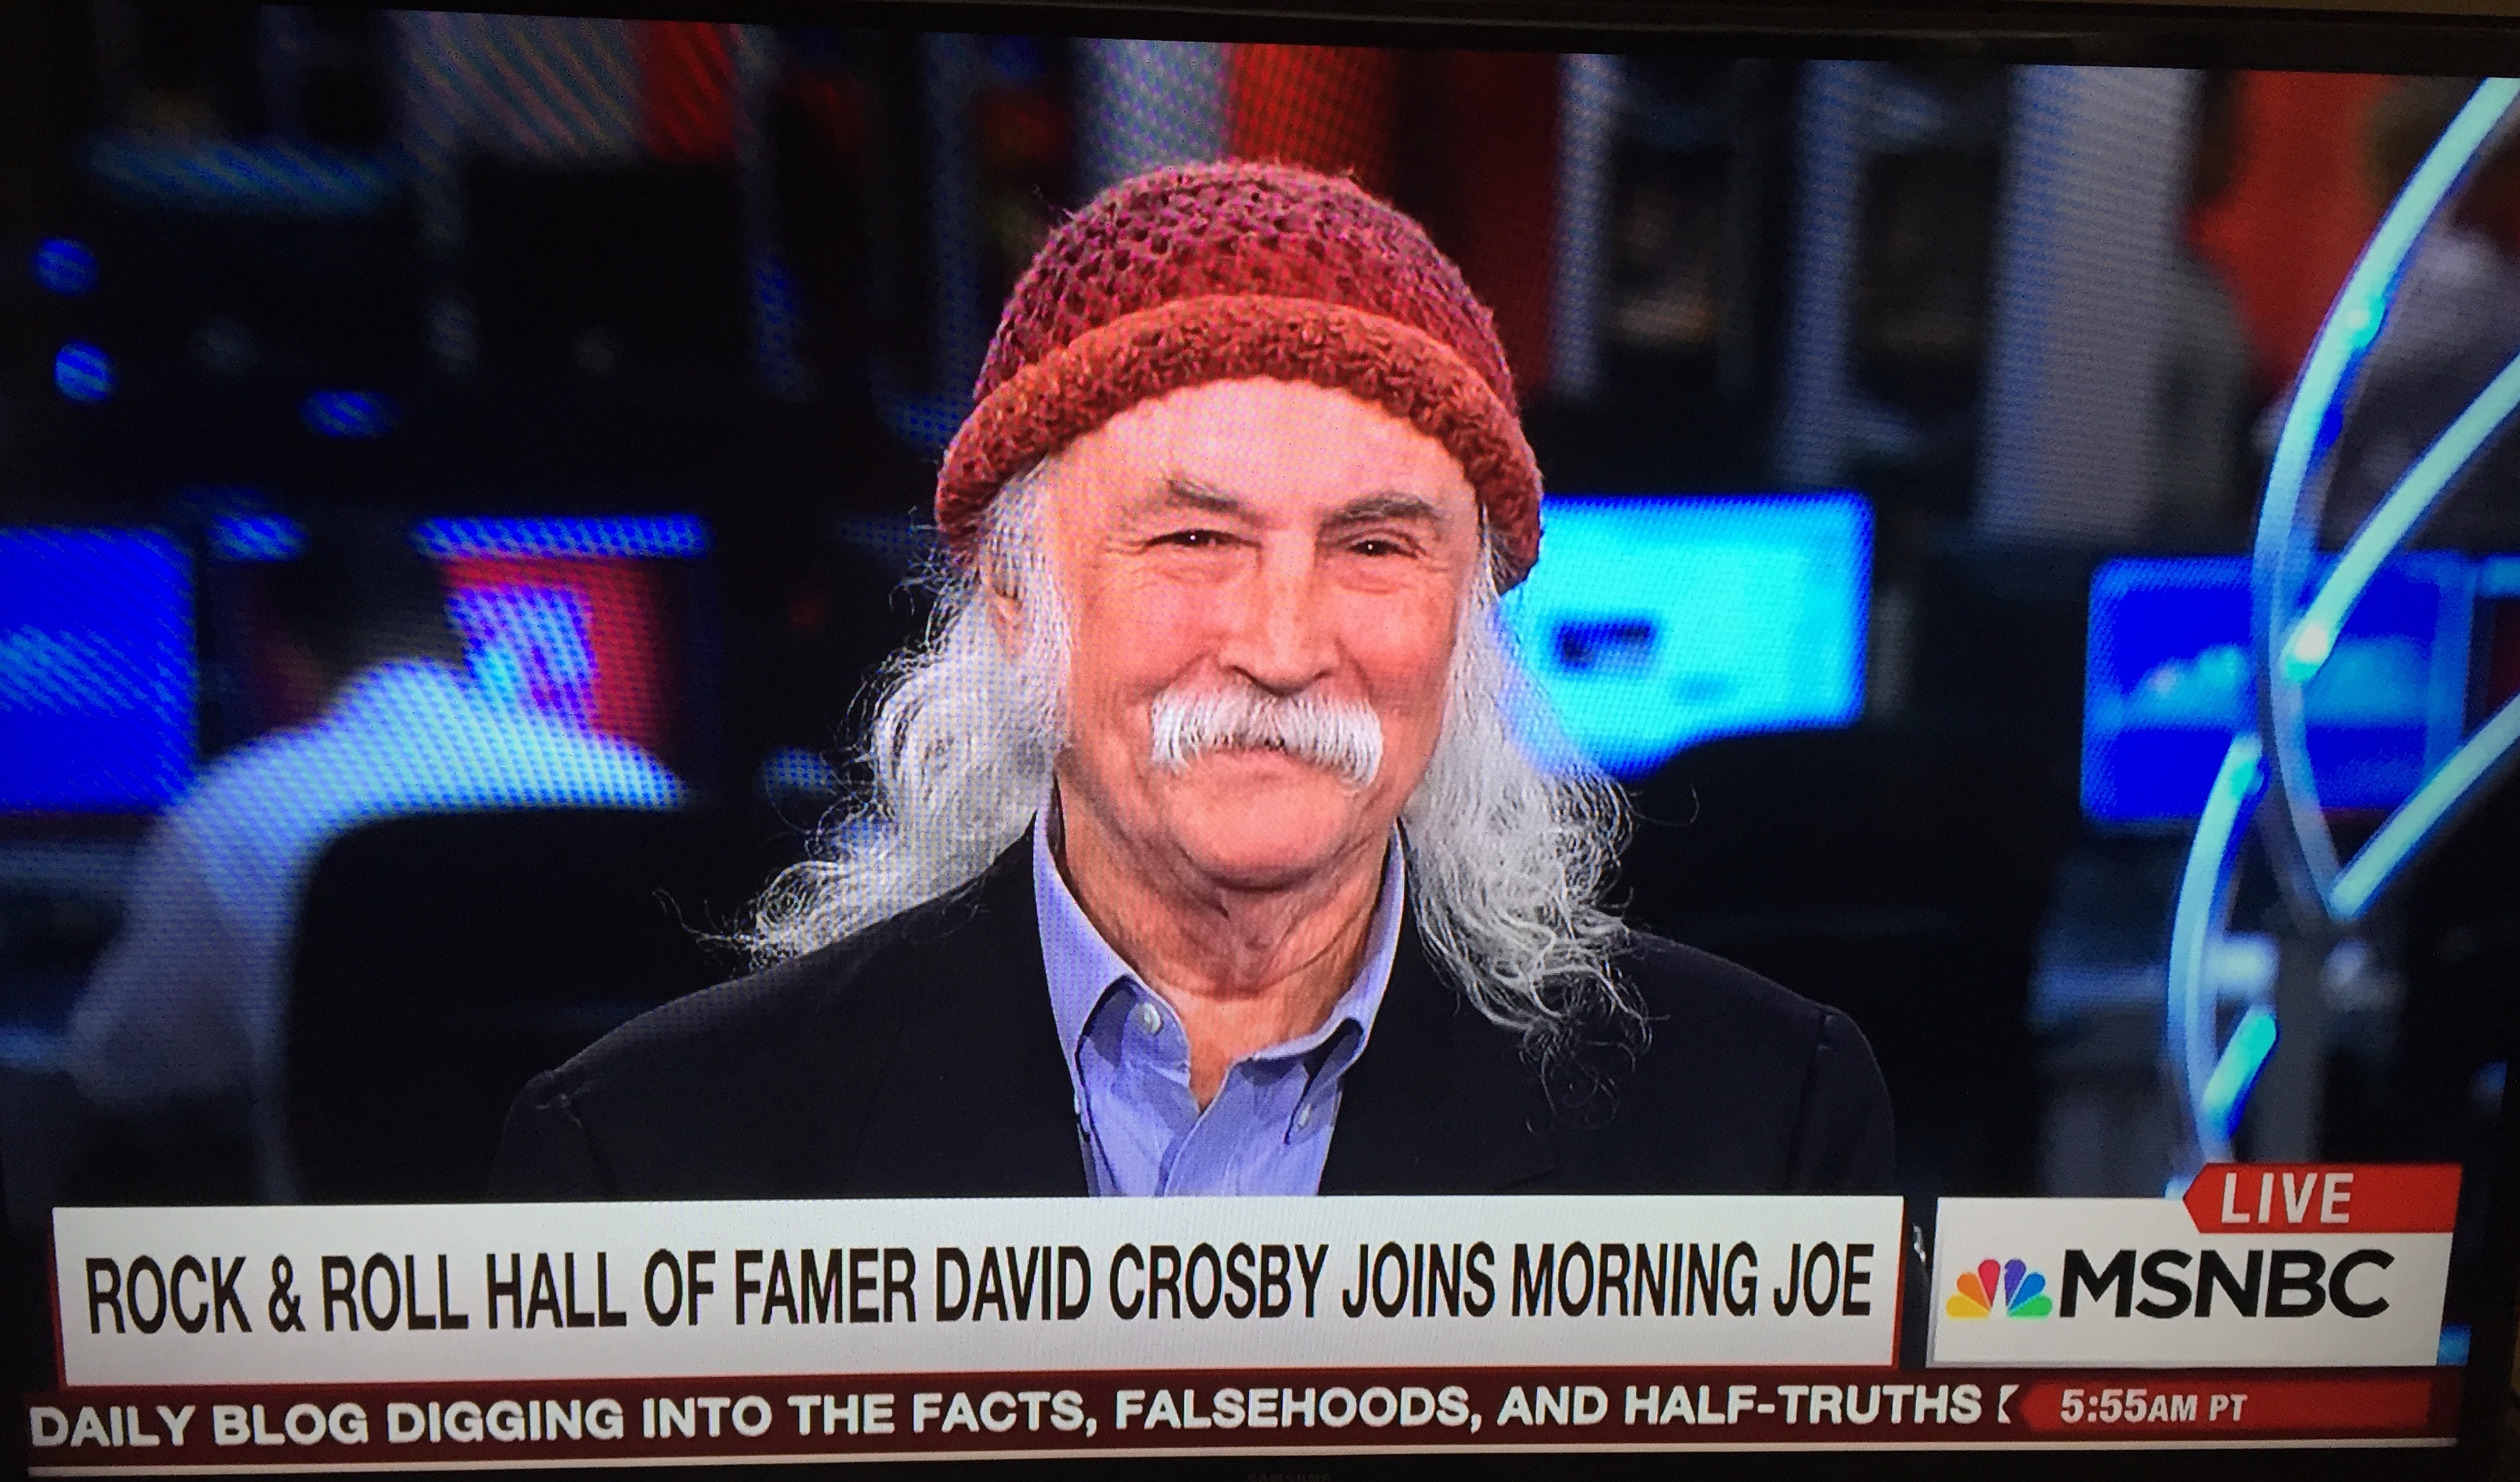 David Crosby on MSNBC's Morning Joe, October 28, 2016